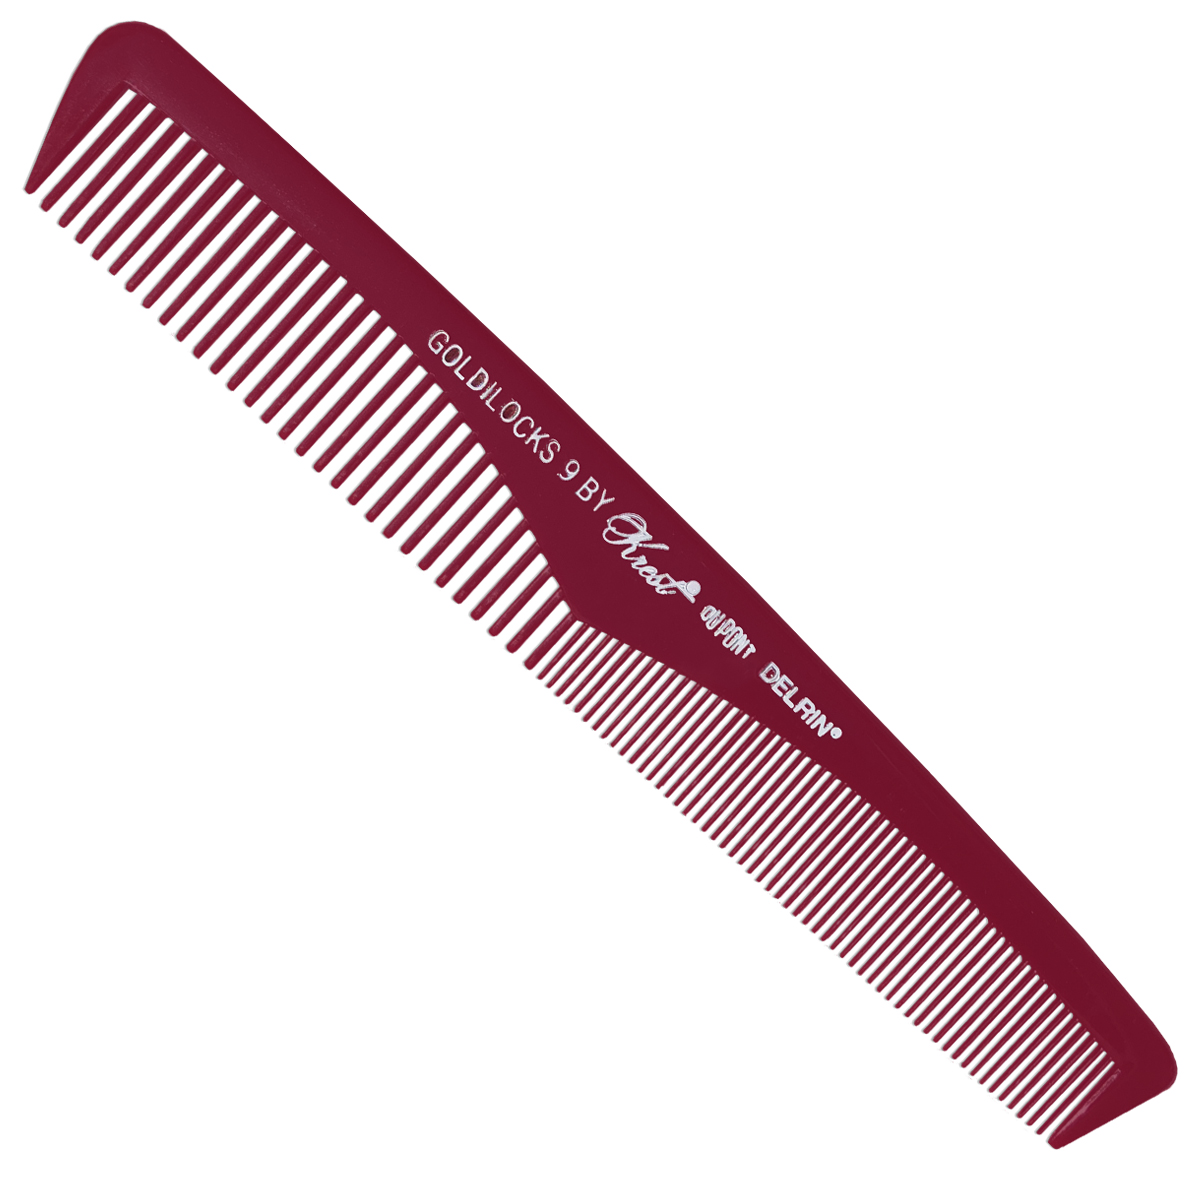 Extra thin taper/clipper Finishing Comb